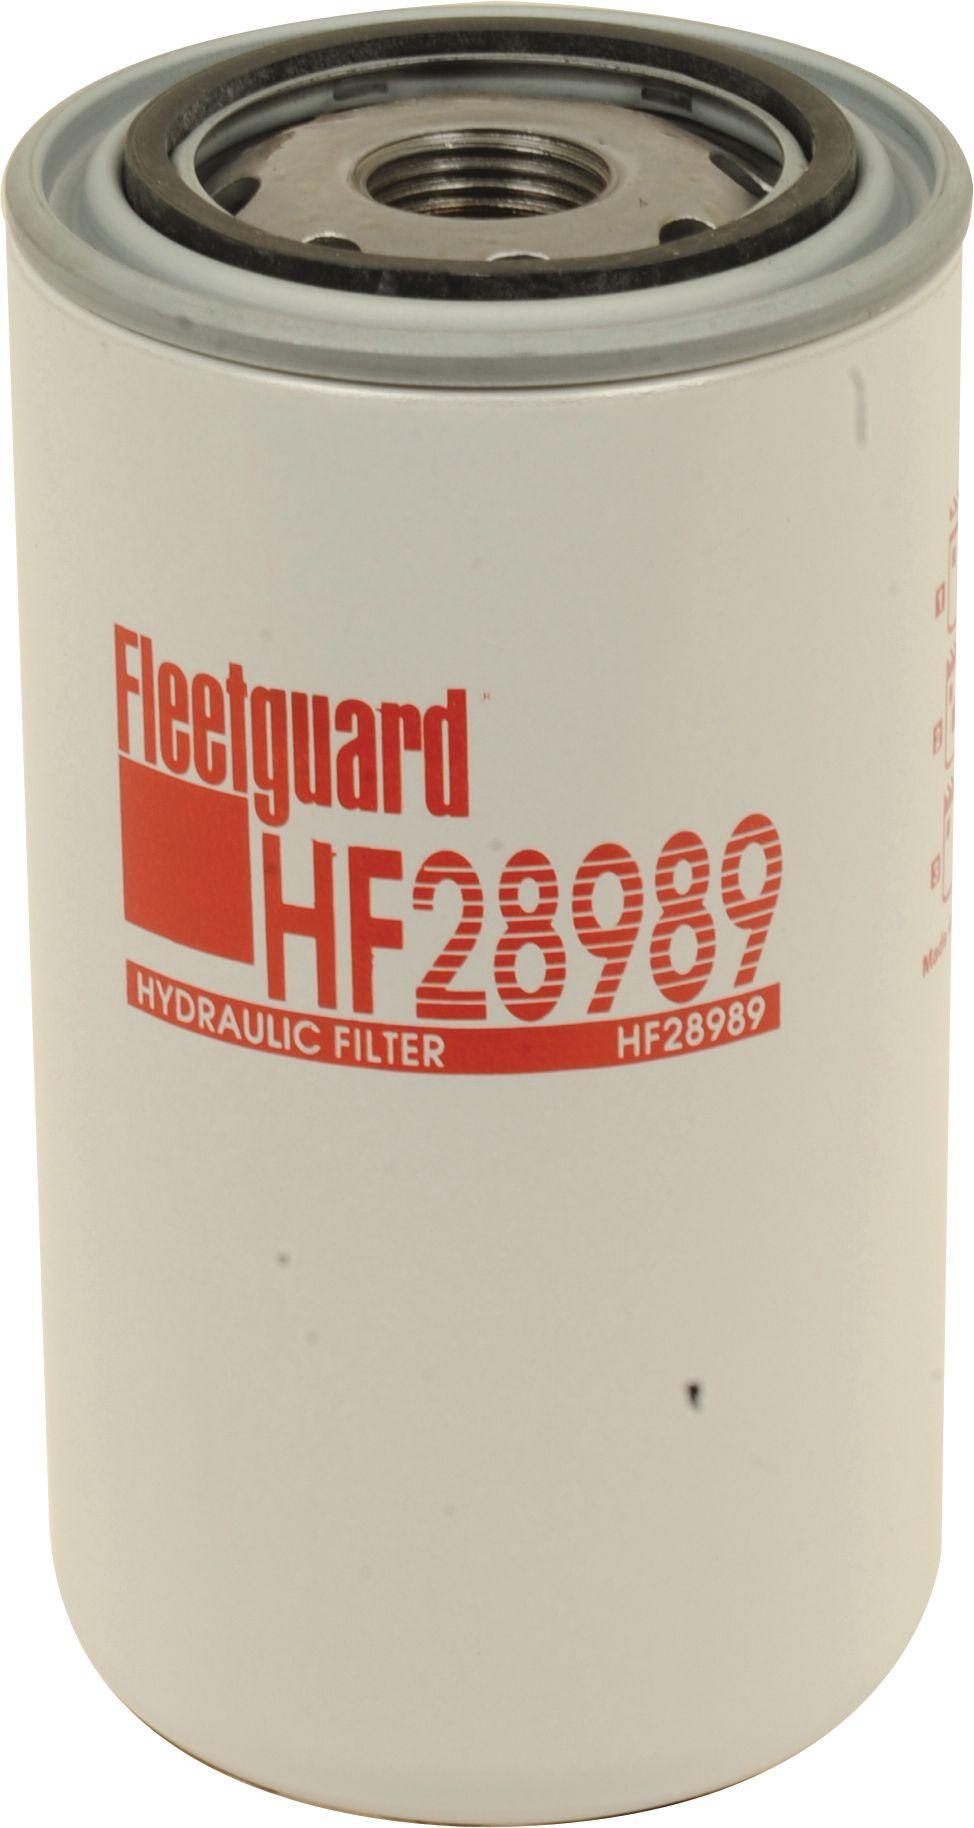 FENDT HYDRAULIC FILTER HF28989 76857